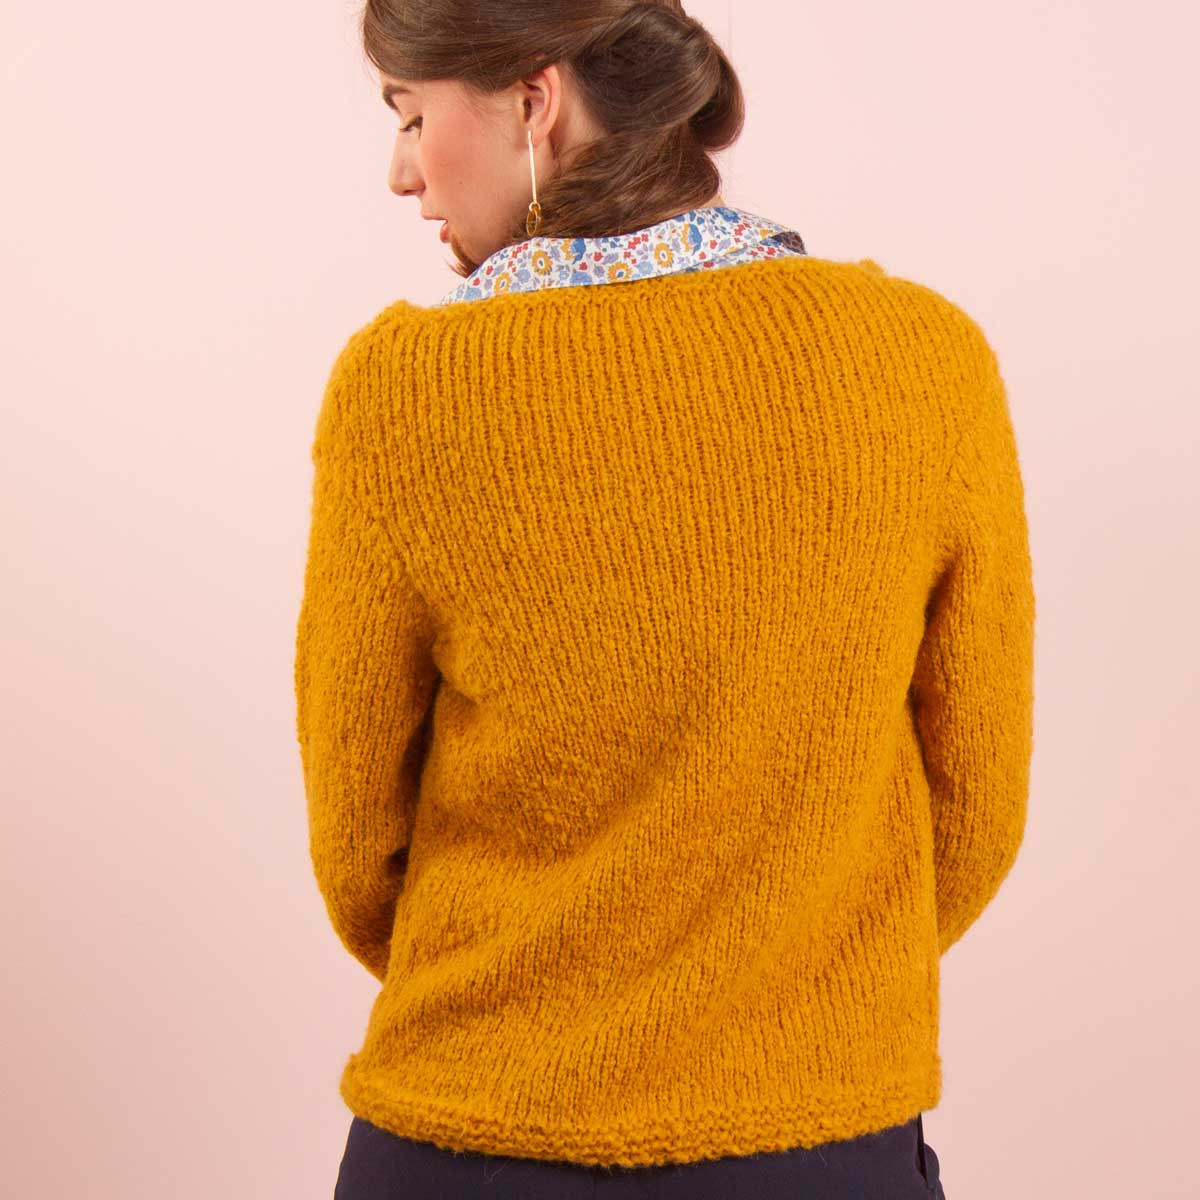 Ystad Cardigan to knit